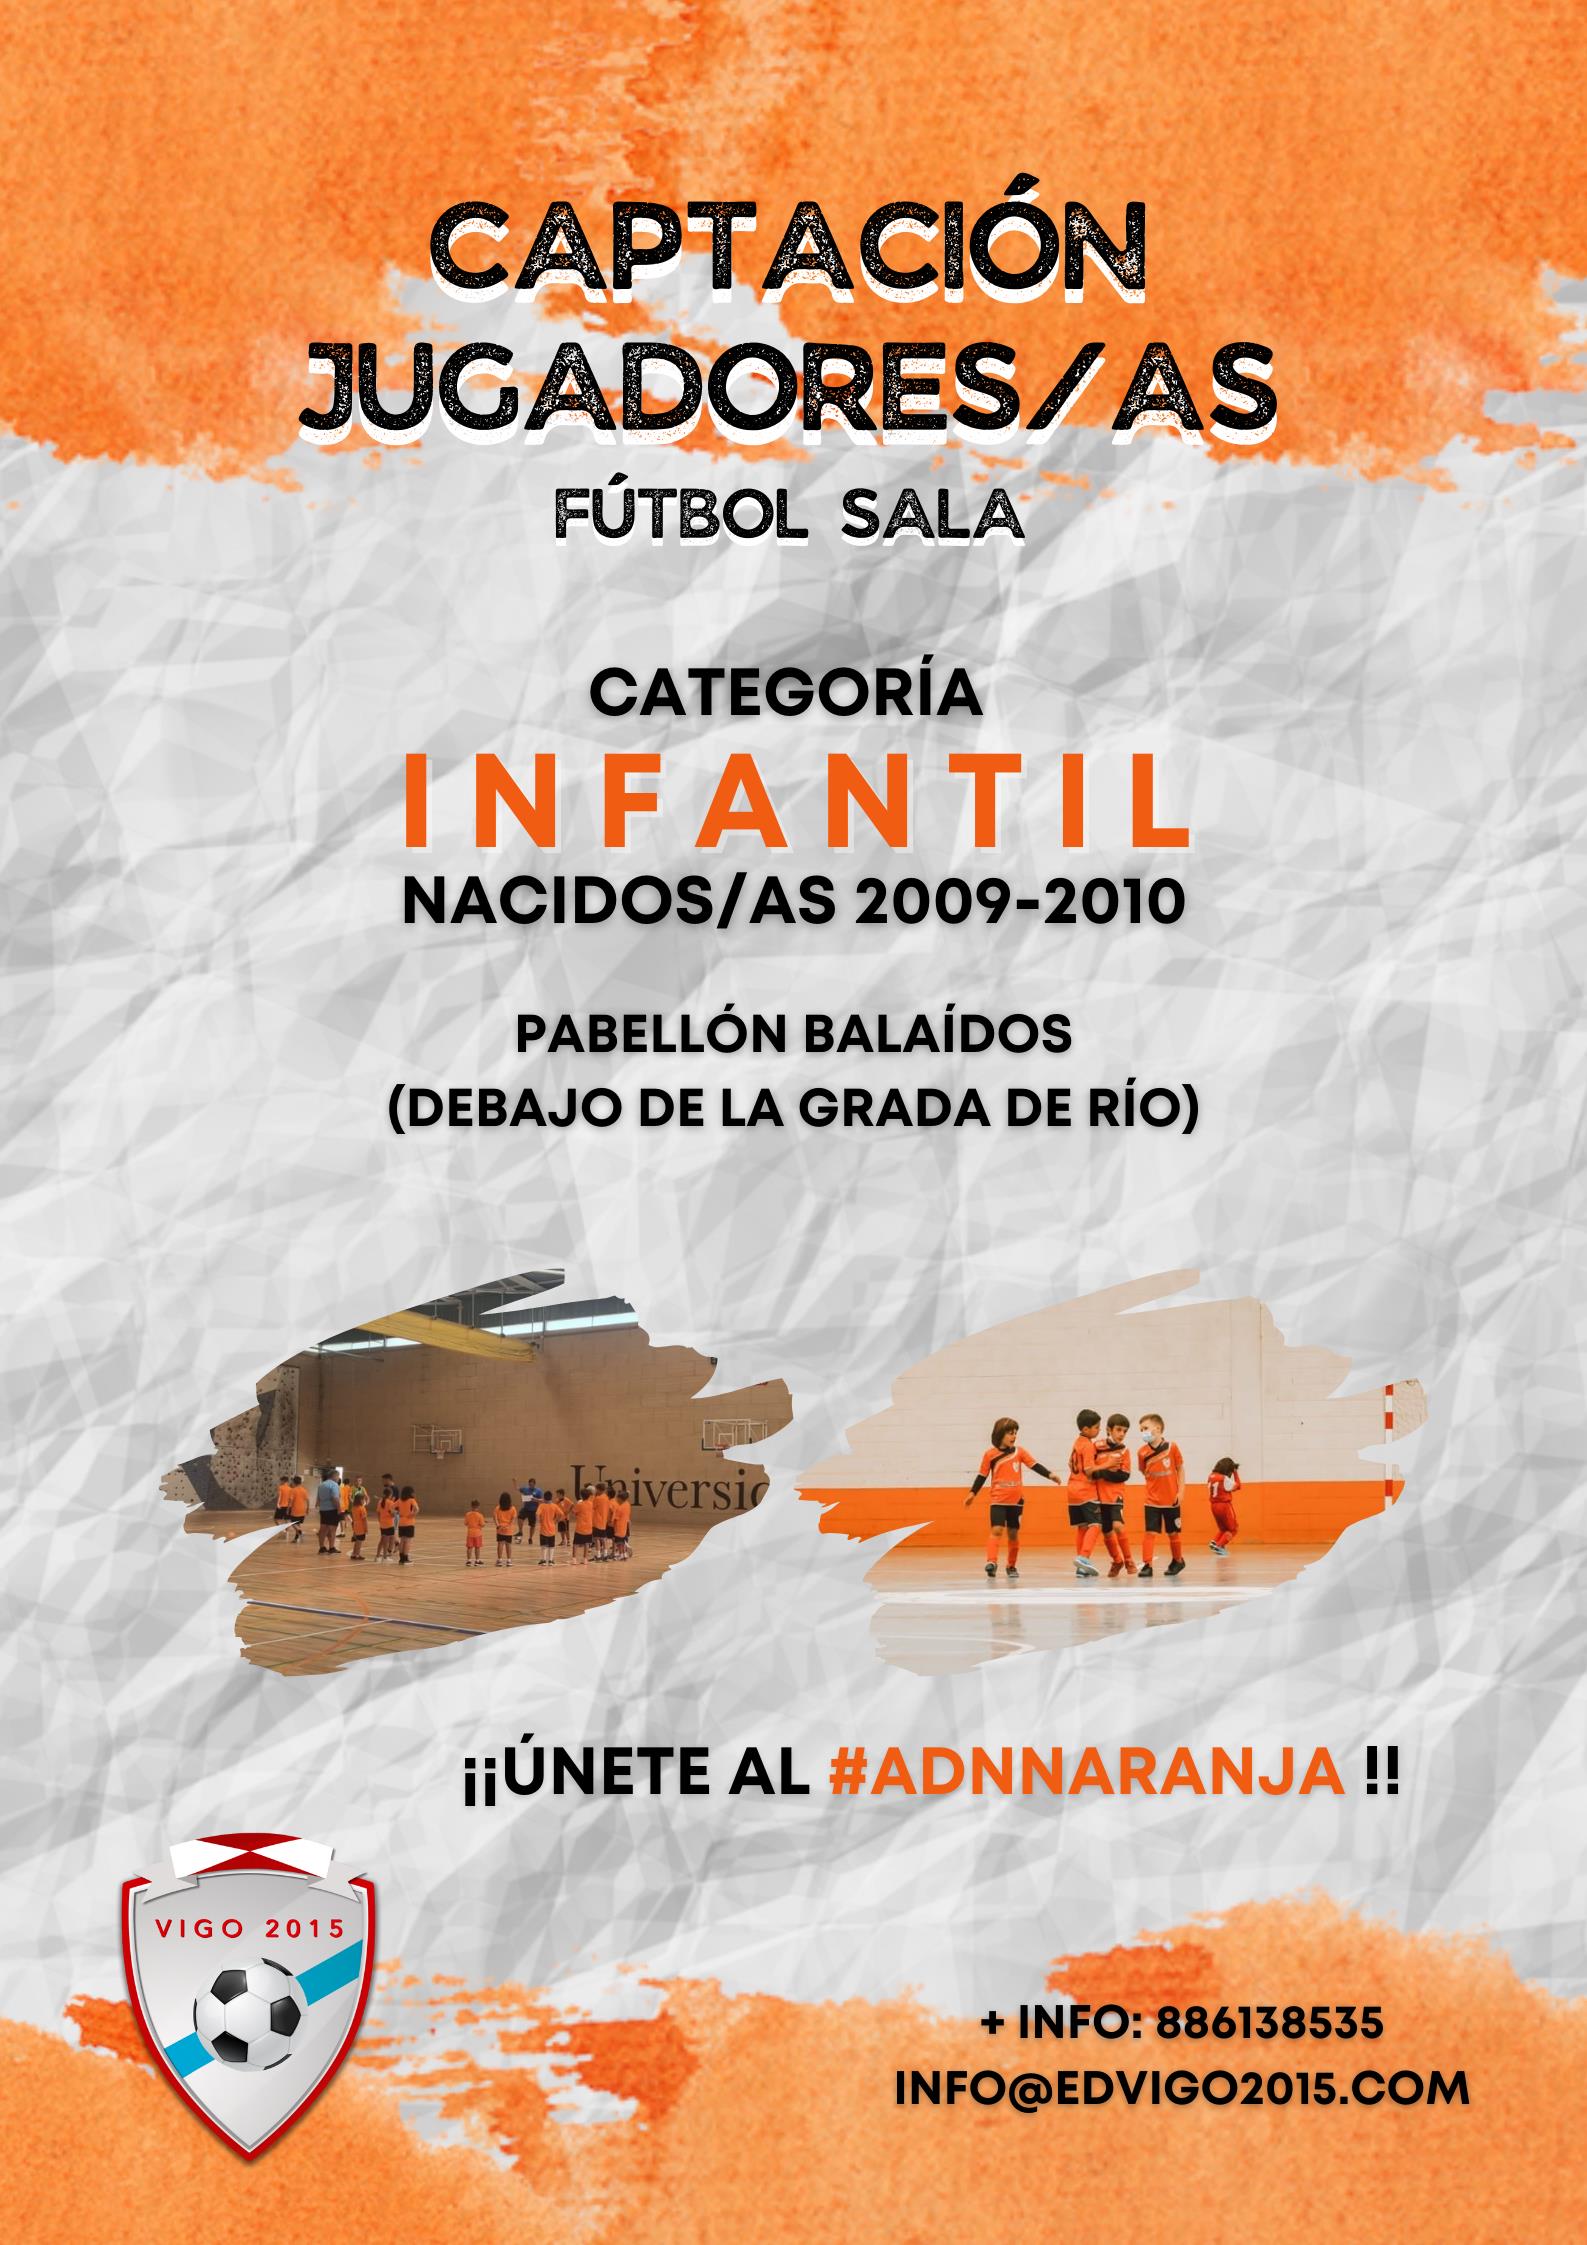 CAPTACIÓN DE JUGADORES/AS